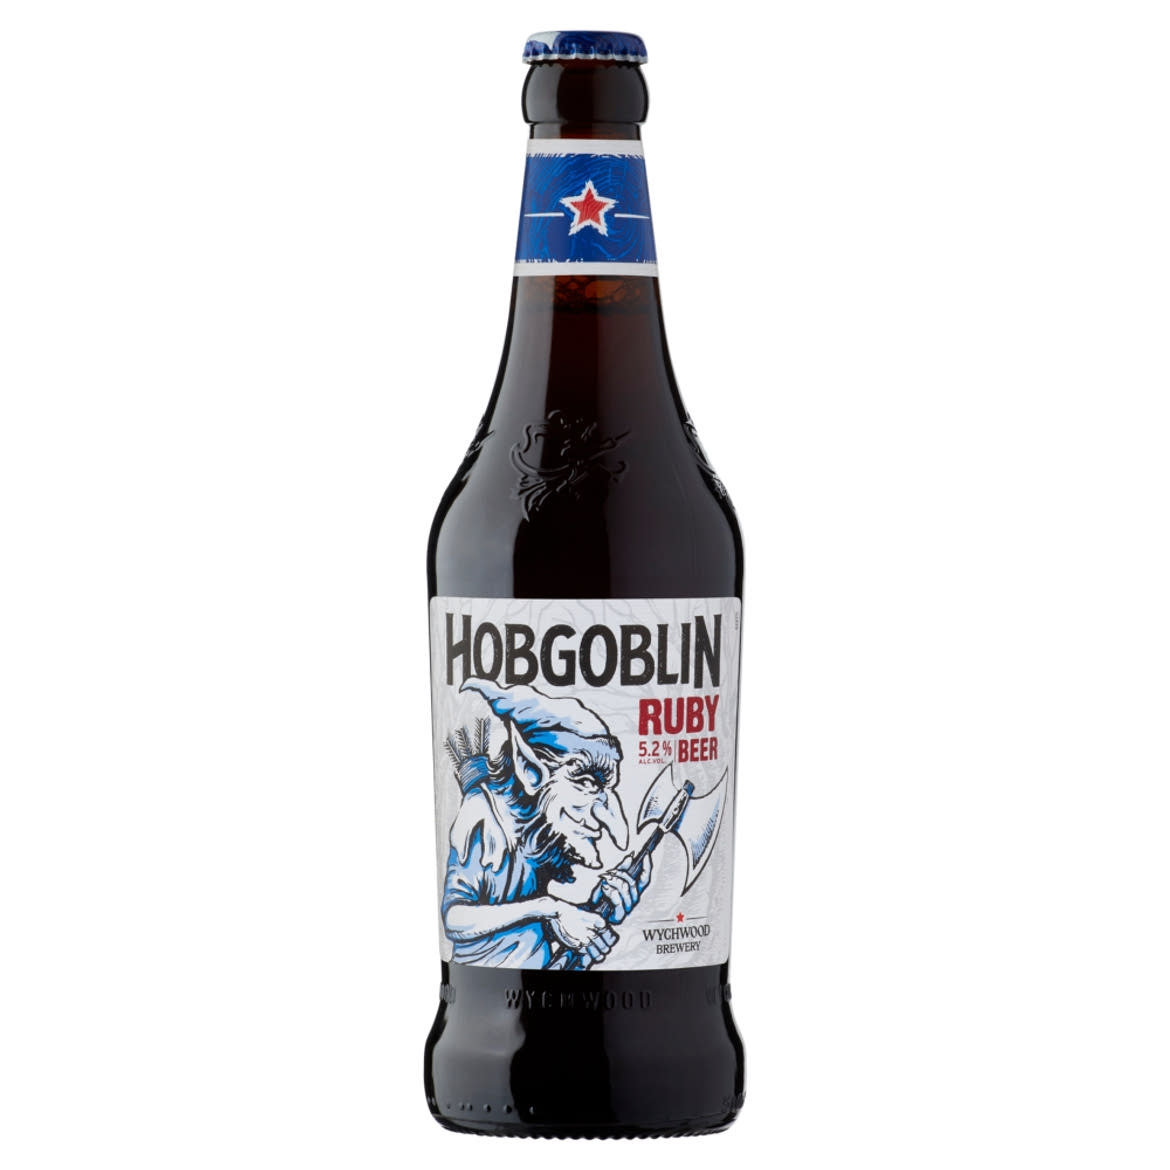 Wychwood Hobgoblin angol vörös sör 5,2%